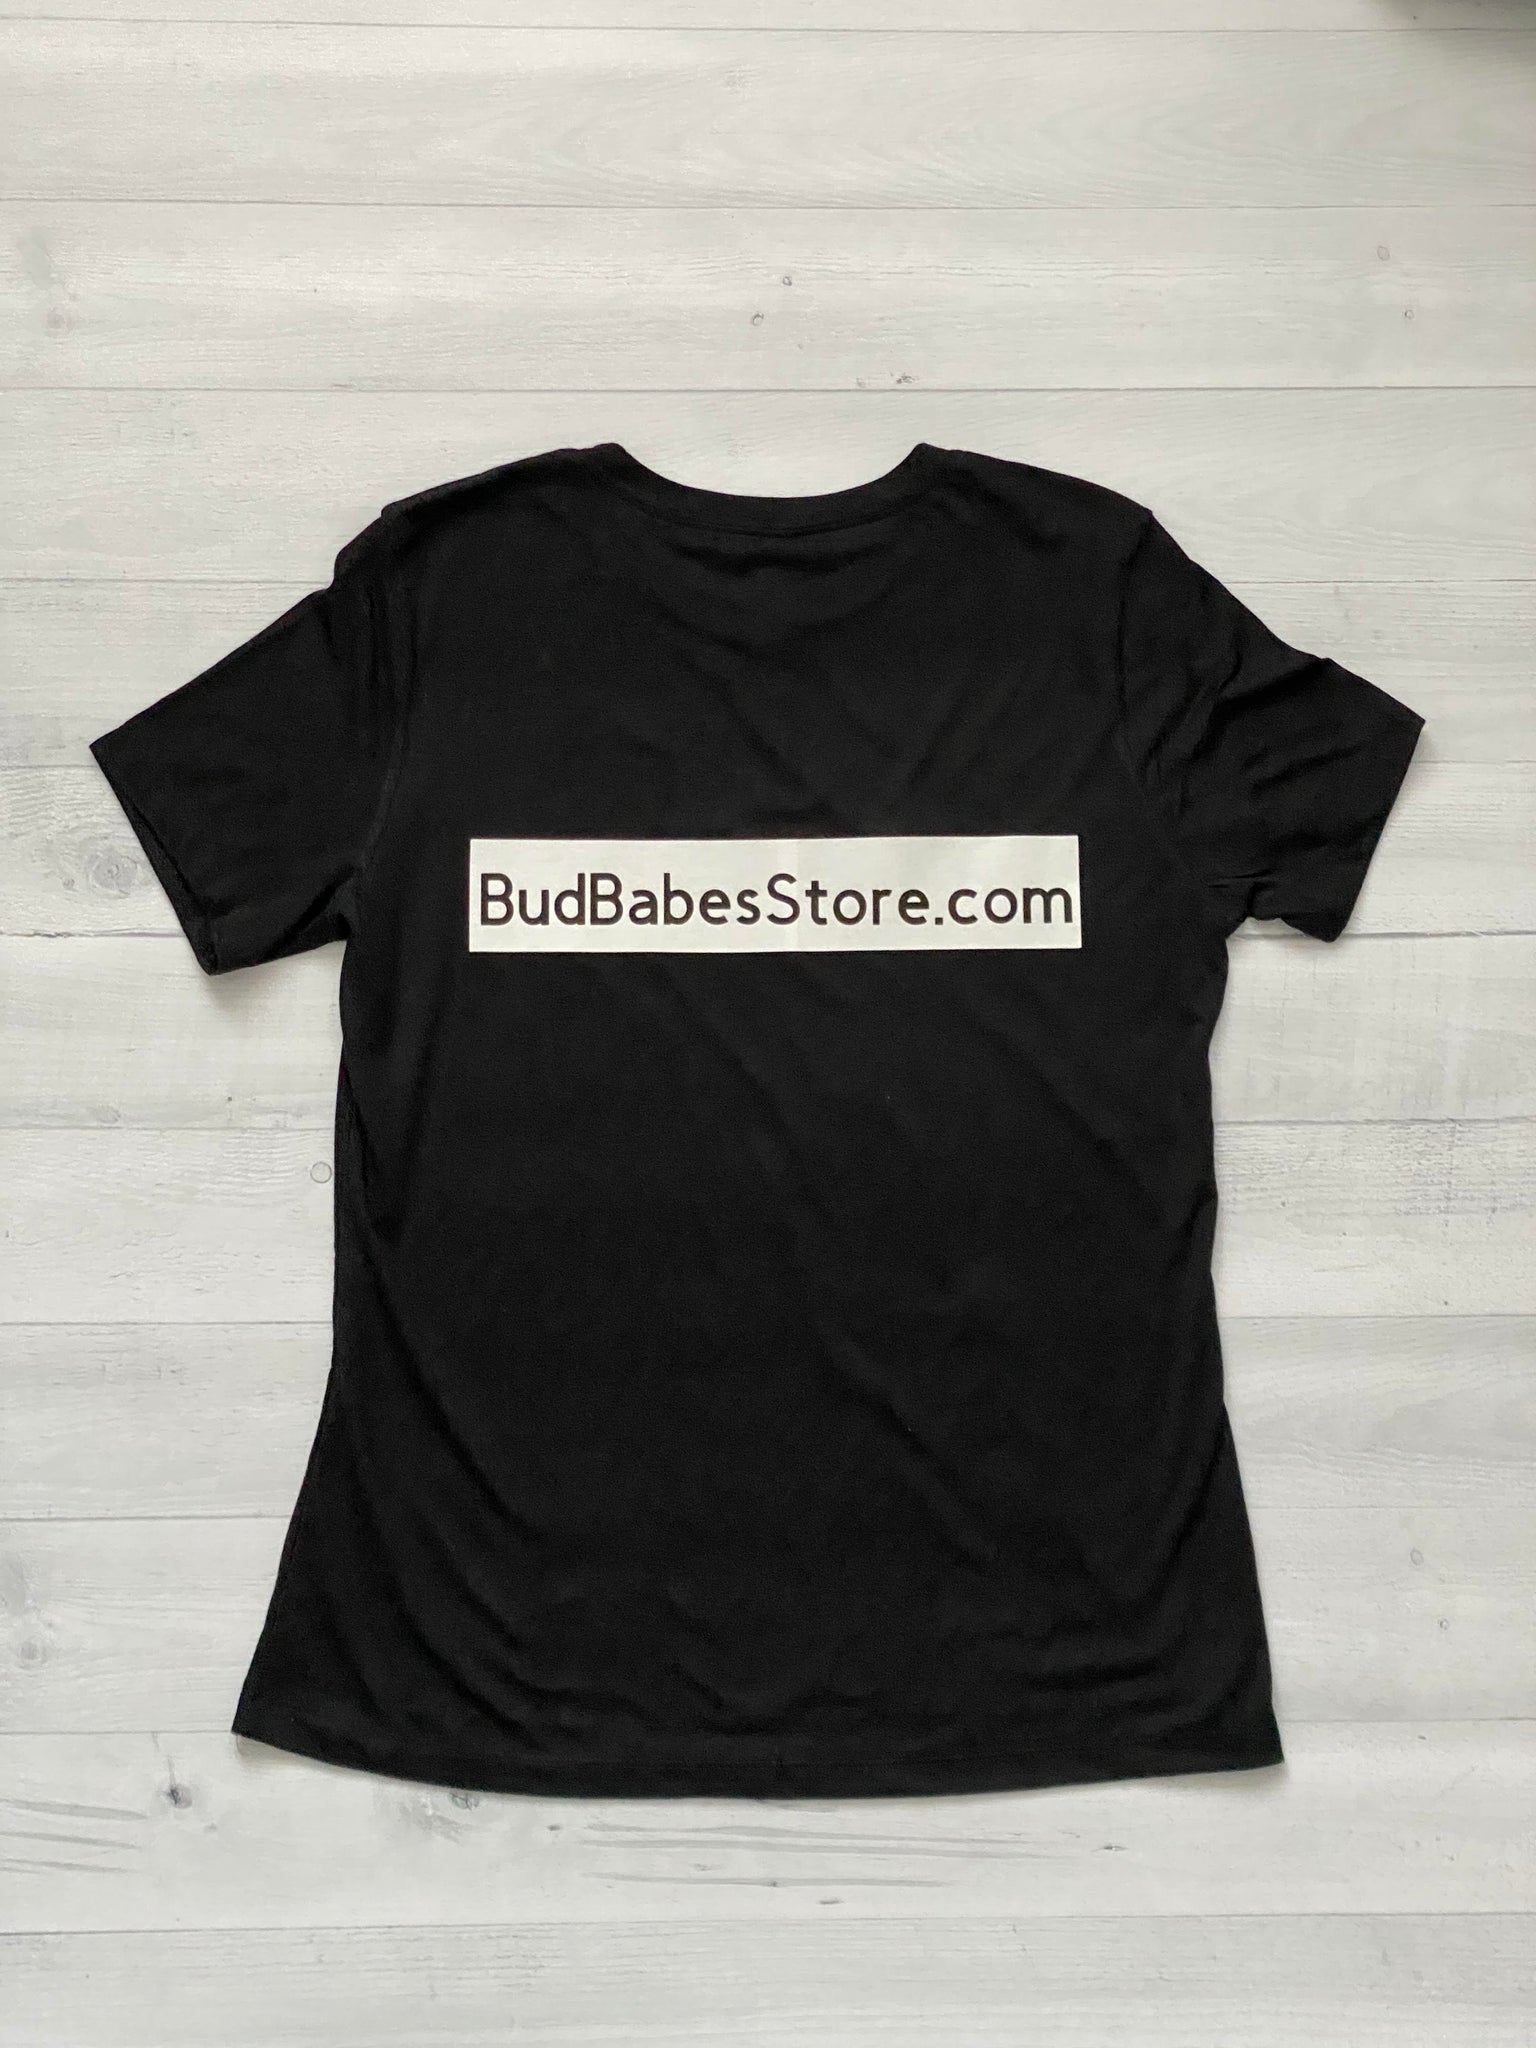 'Bud Babes Store' T-Shirt